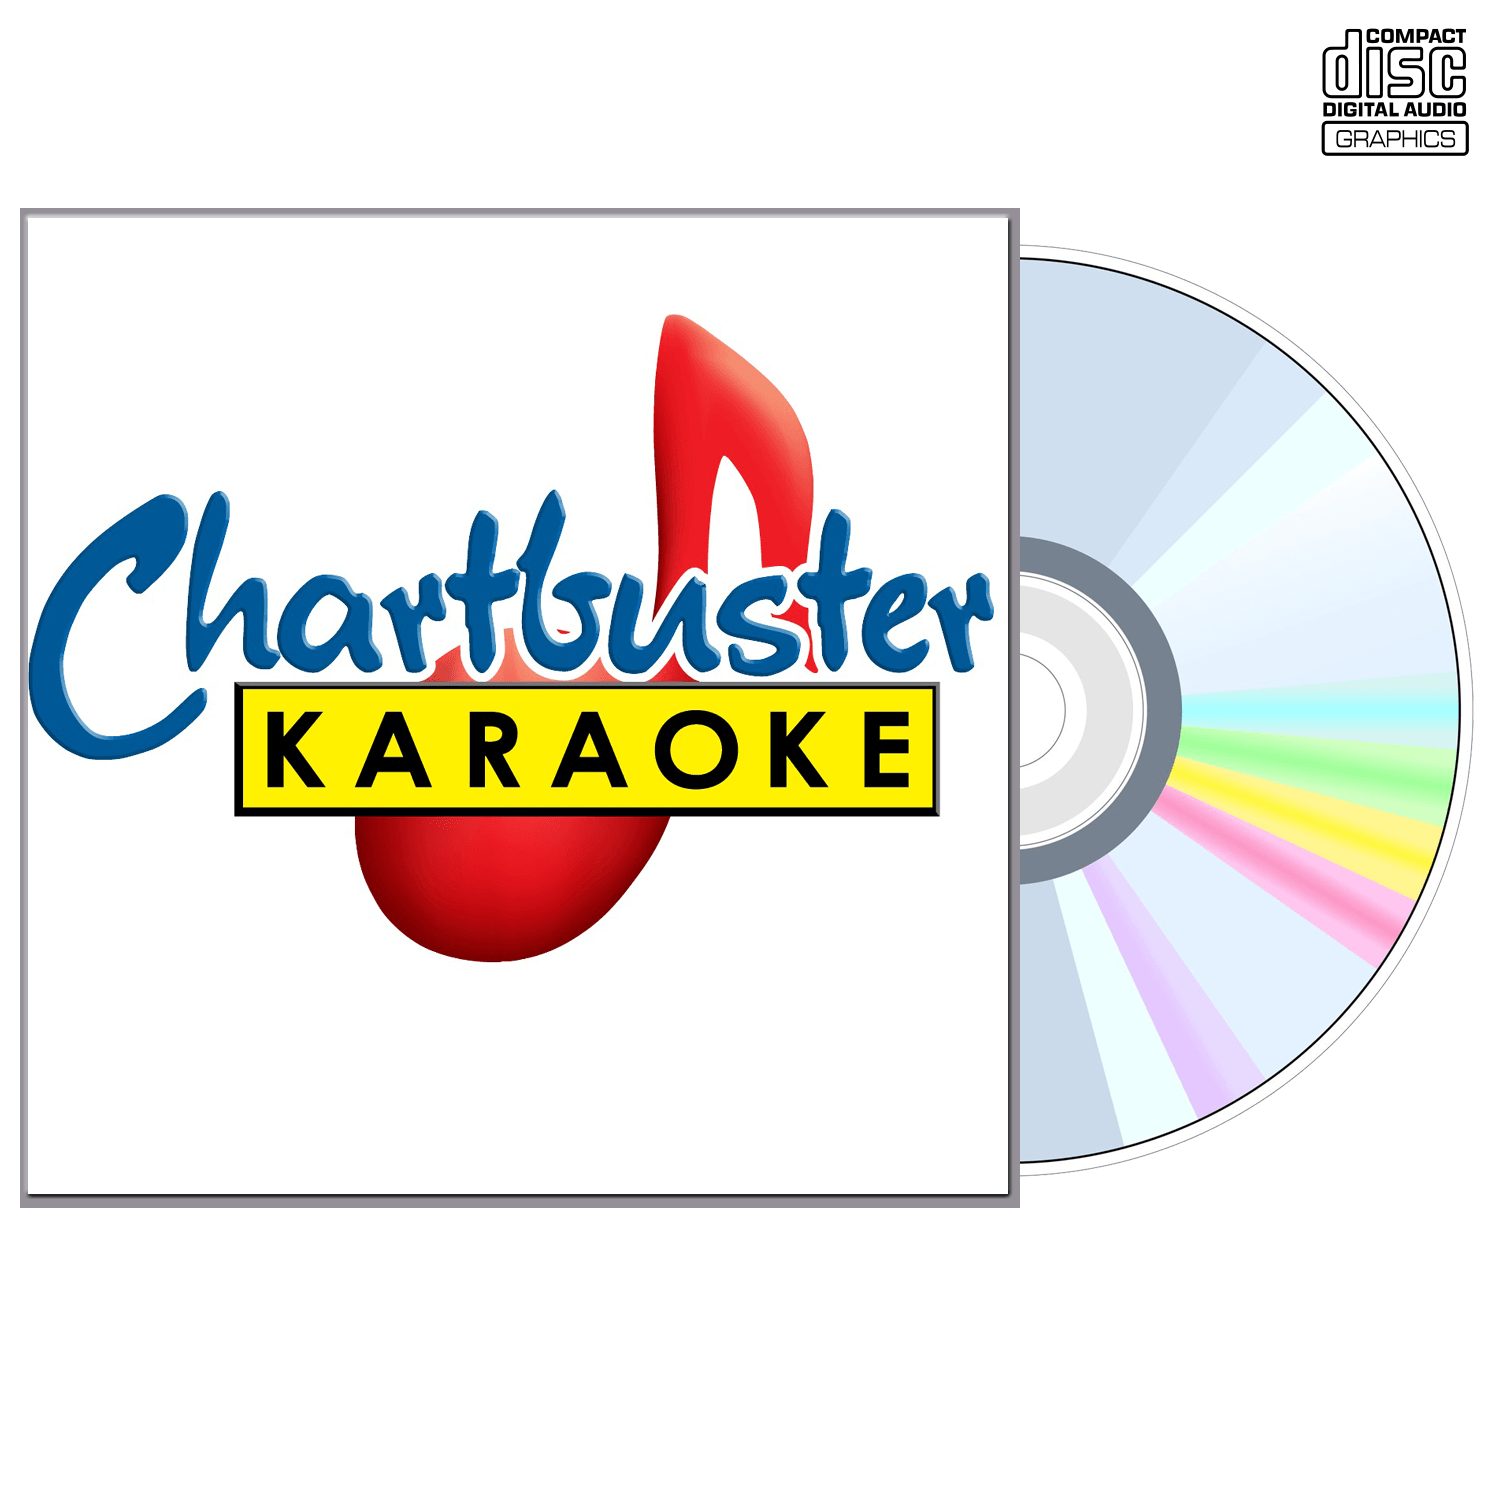 Dixie Chicks Vol 1 - CD+G - Chartbuster Karaoke - Karaoke Home Entertainment